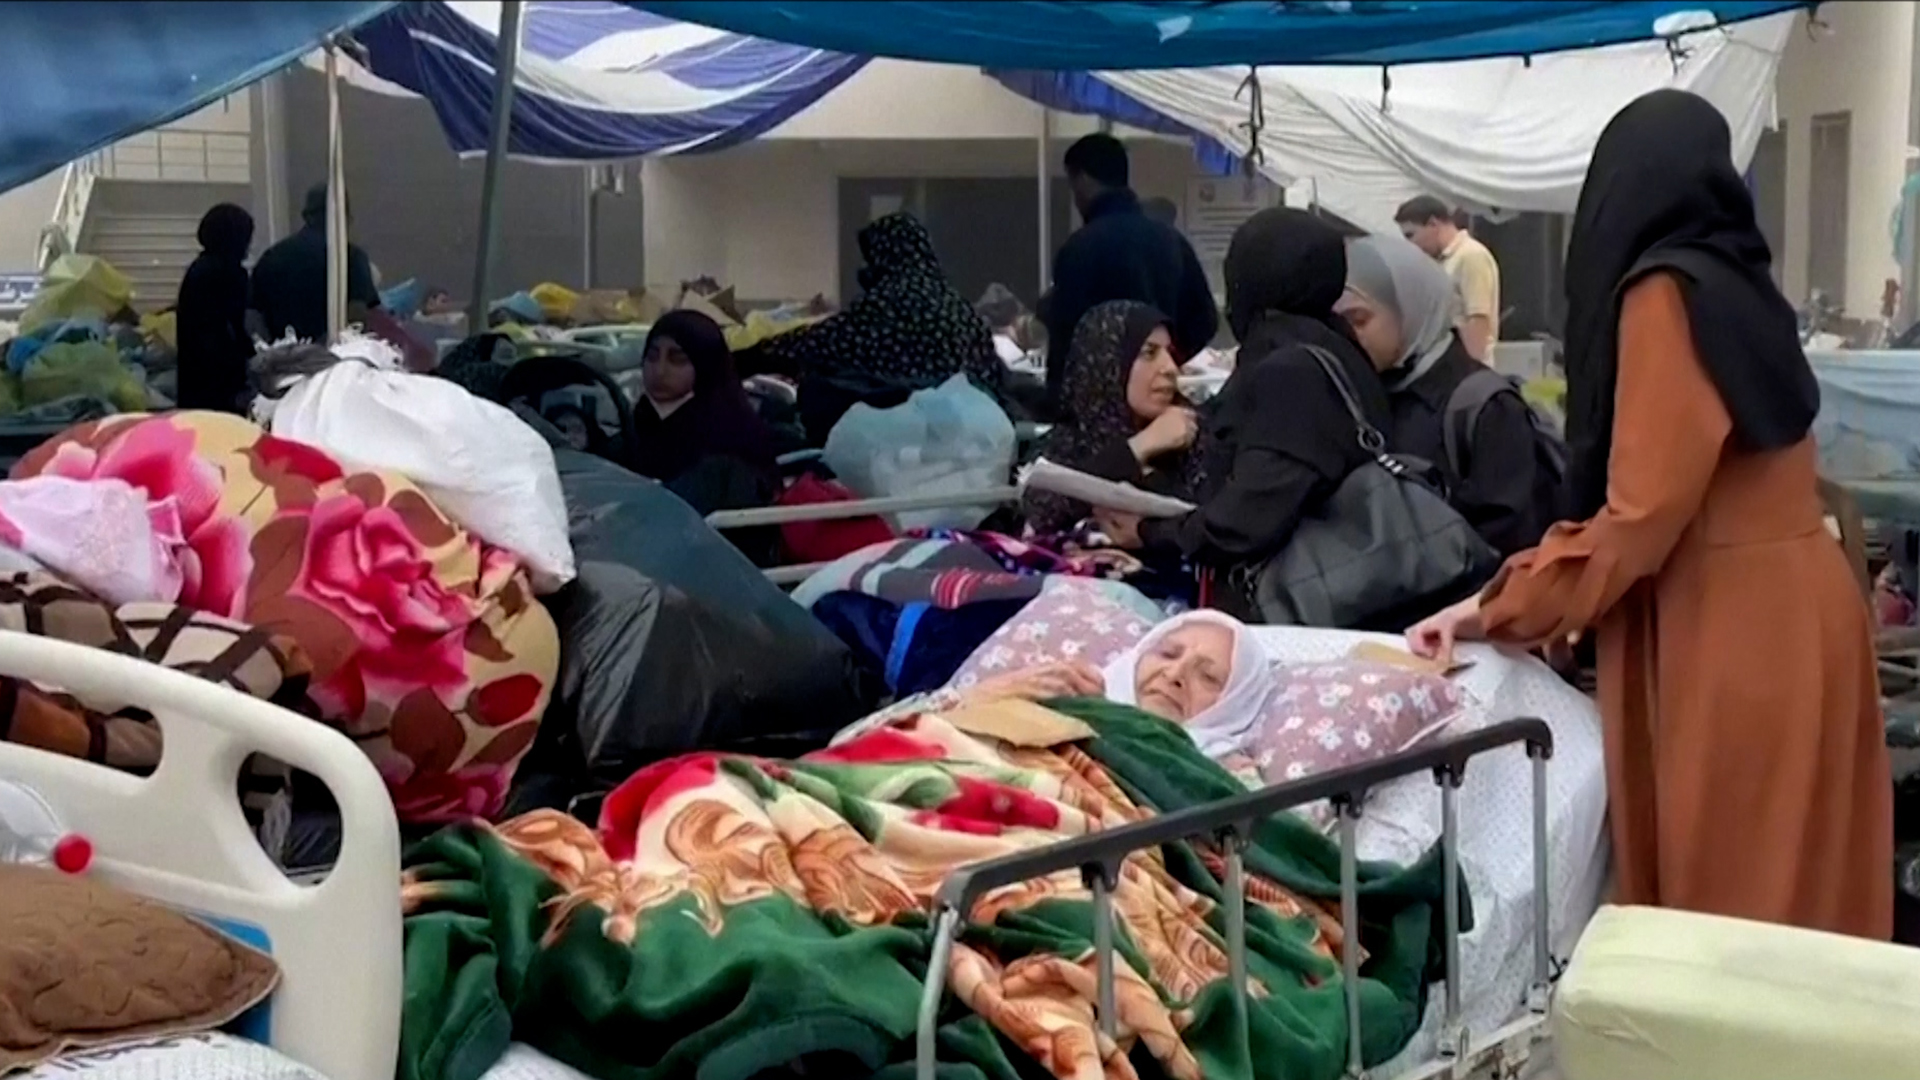 Dire conditions at al-Shifa Hospital revealed during Gaza pause | Gaza